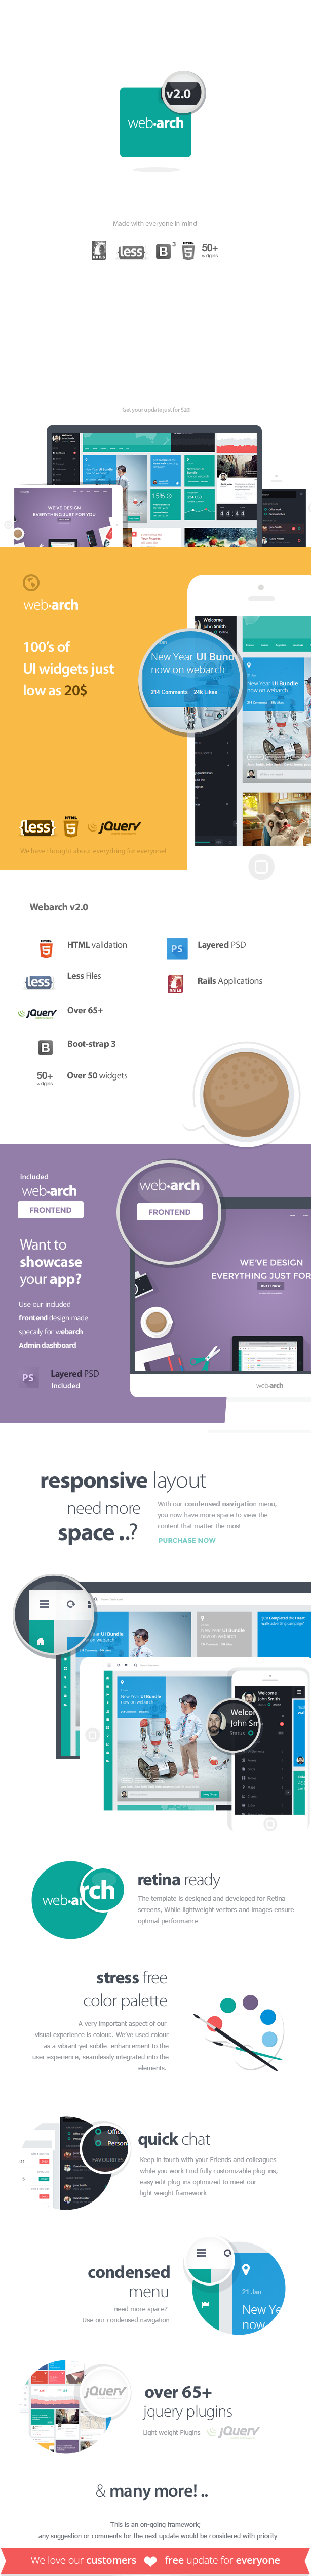 Webarch - Responsive Admin Dashboard Template - 4